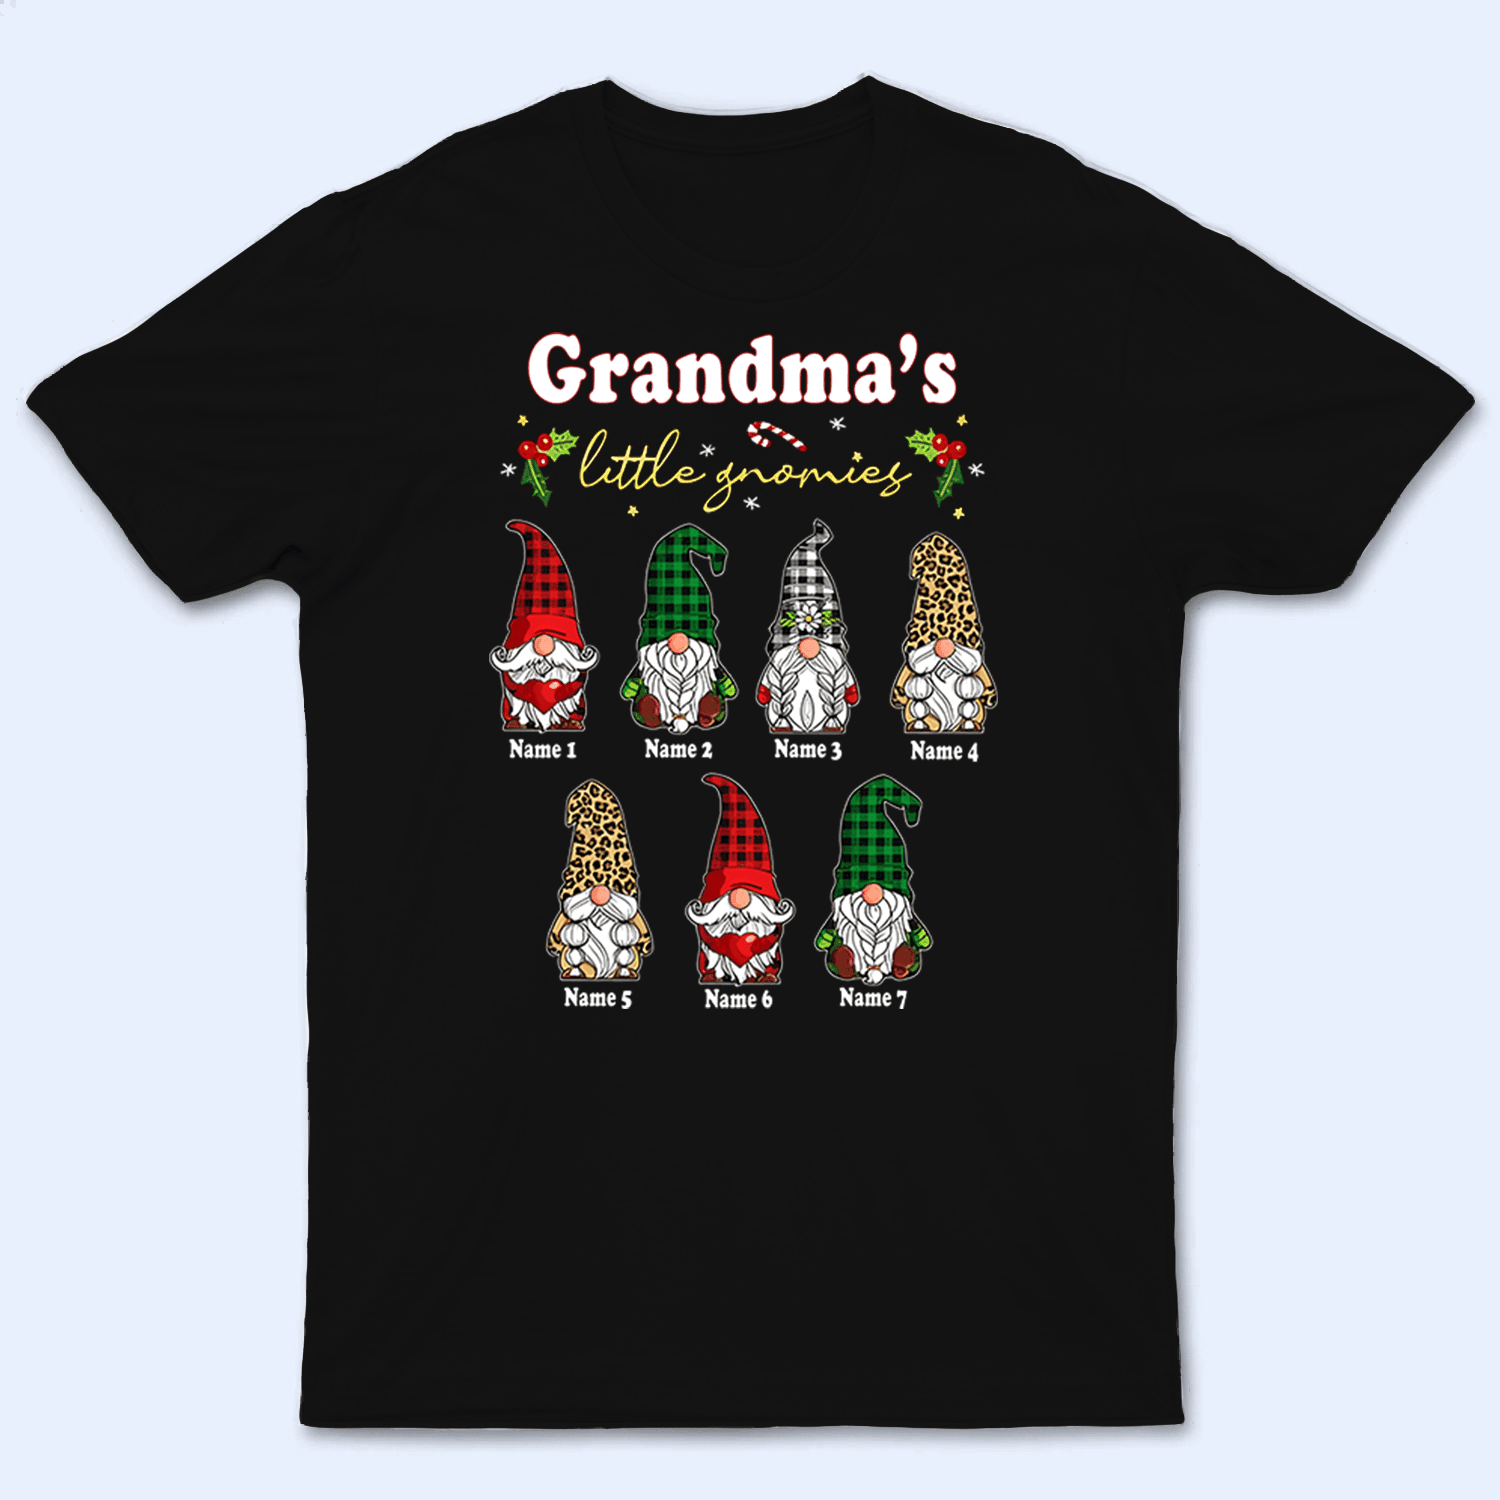 Grandma's Little Gnomies - Personalized Custom T Shirt - Christmas, Loving, Funny Gift for Grandma/Nana/Mimi, Mom, Wife, Grandparent - Suzitee Store